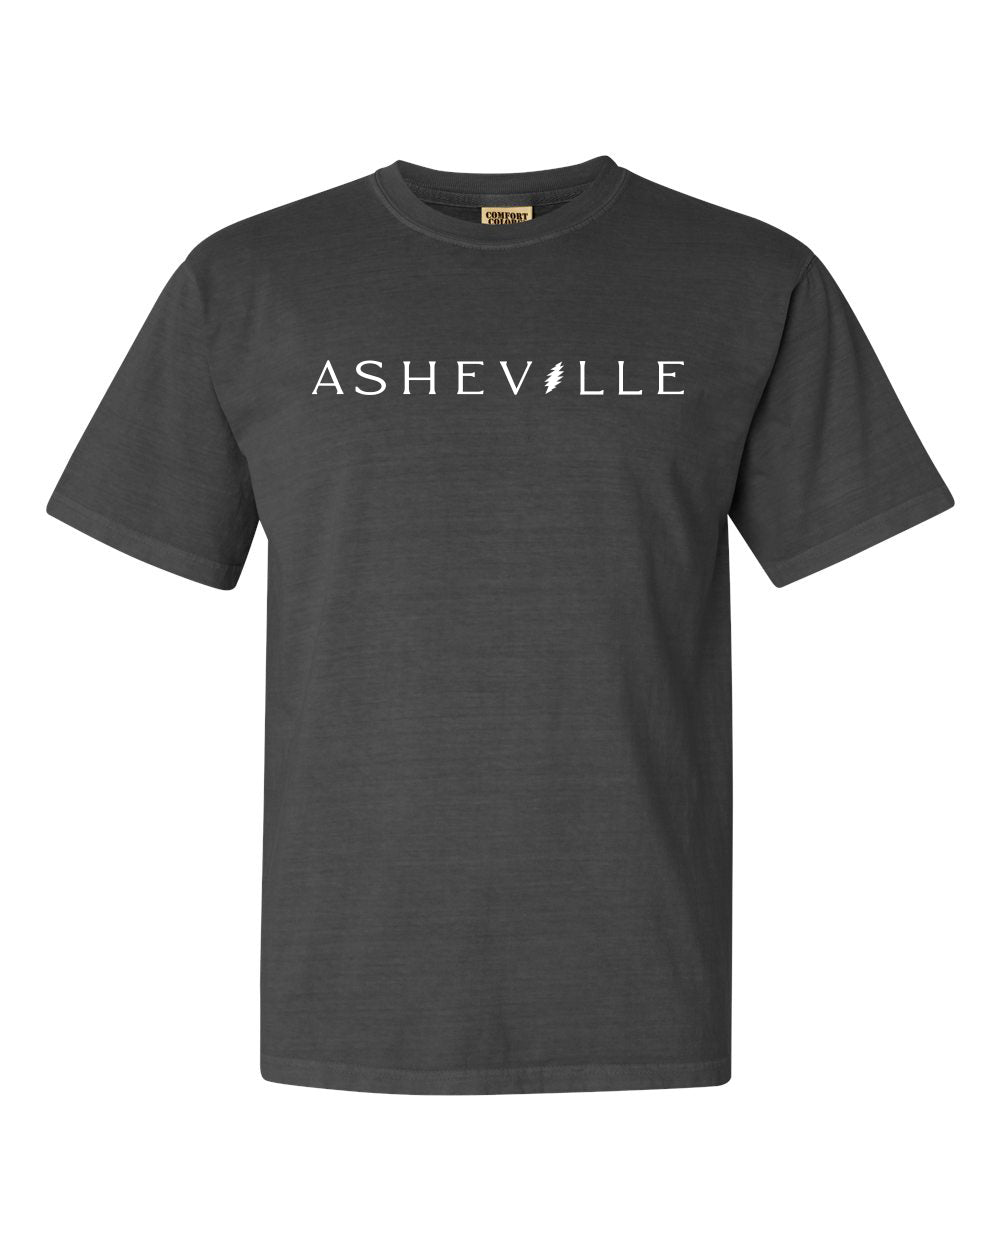 ASHEVILLE Stanley Bear T-Shirt Space - The ASHEVILLE Co. TM